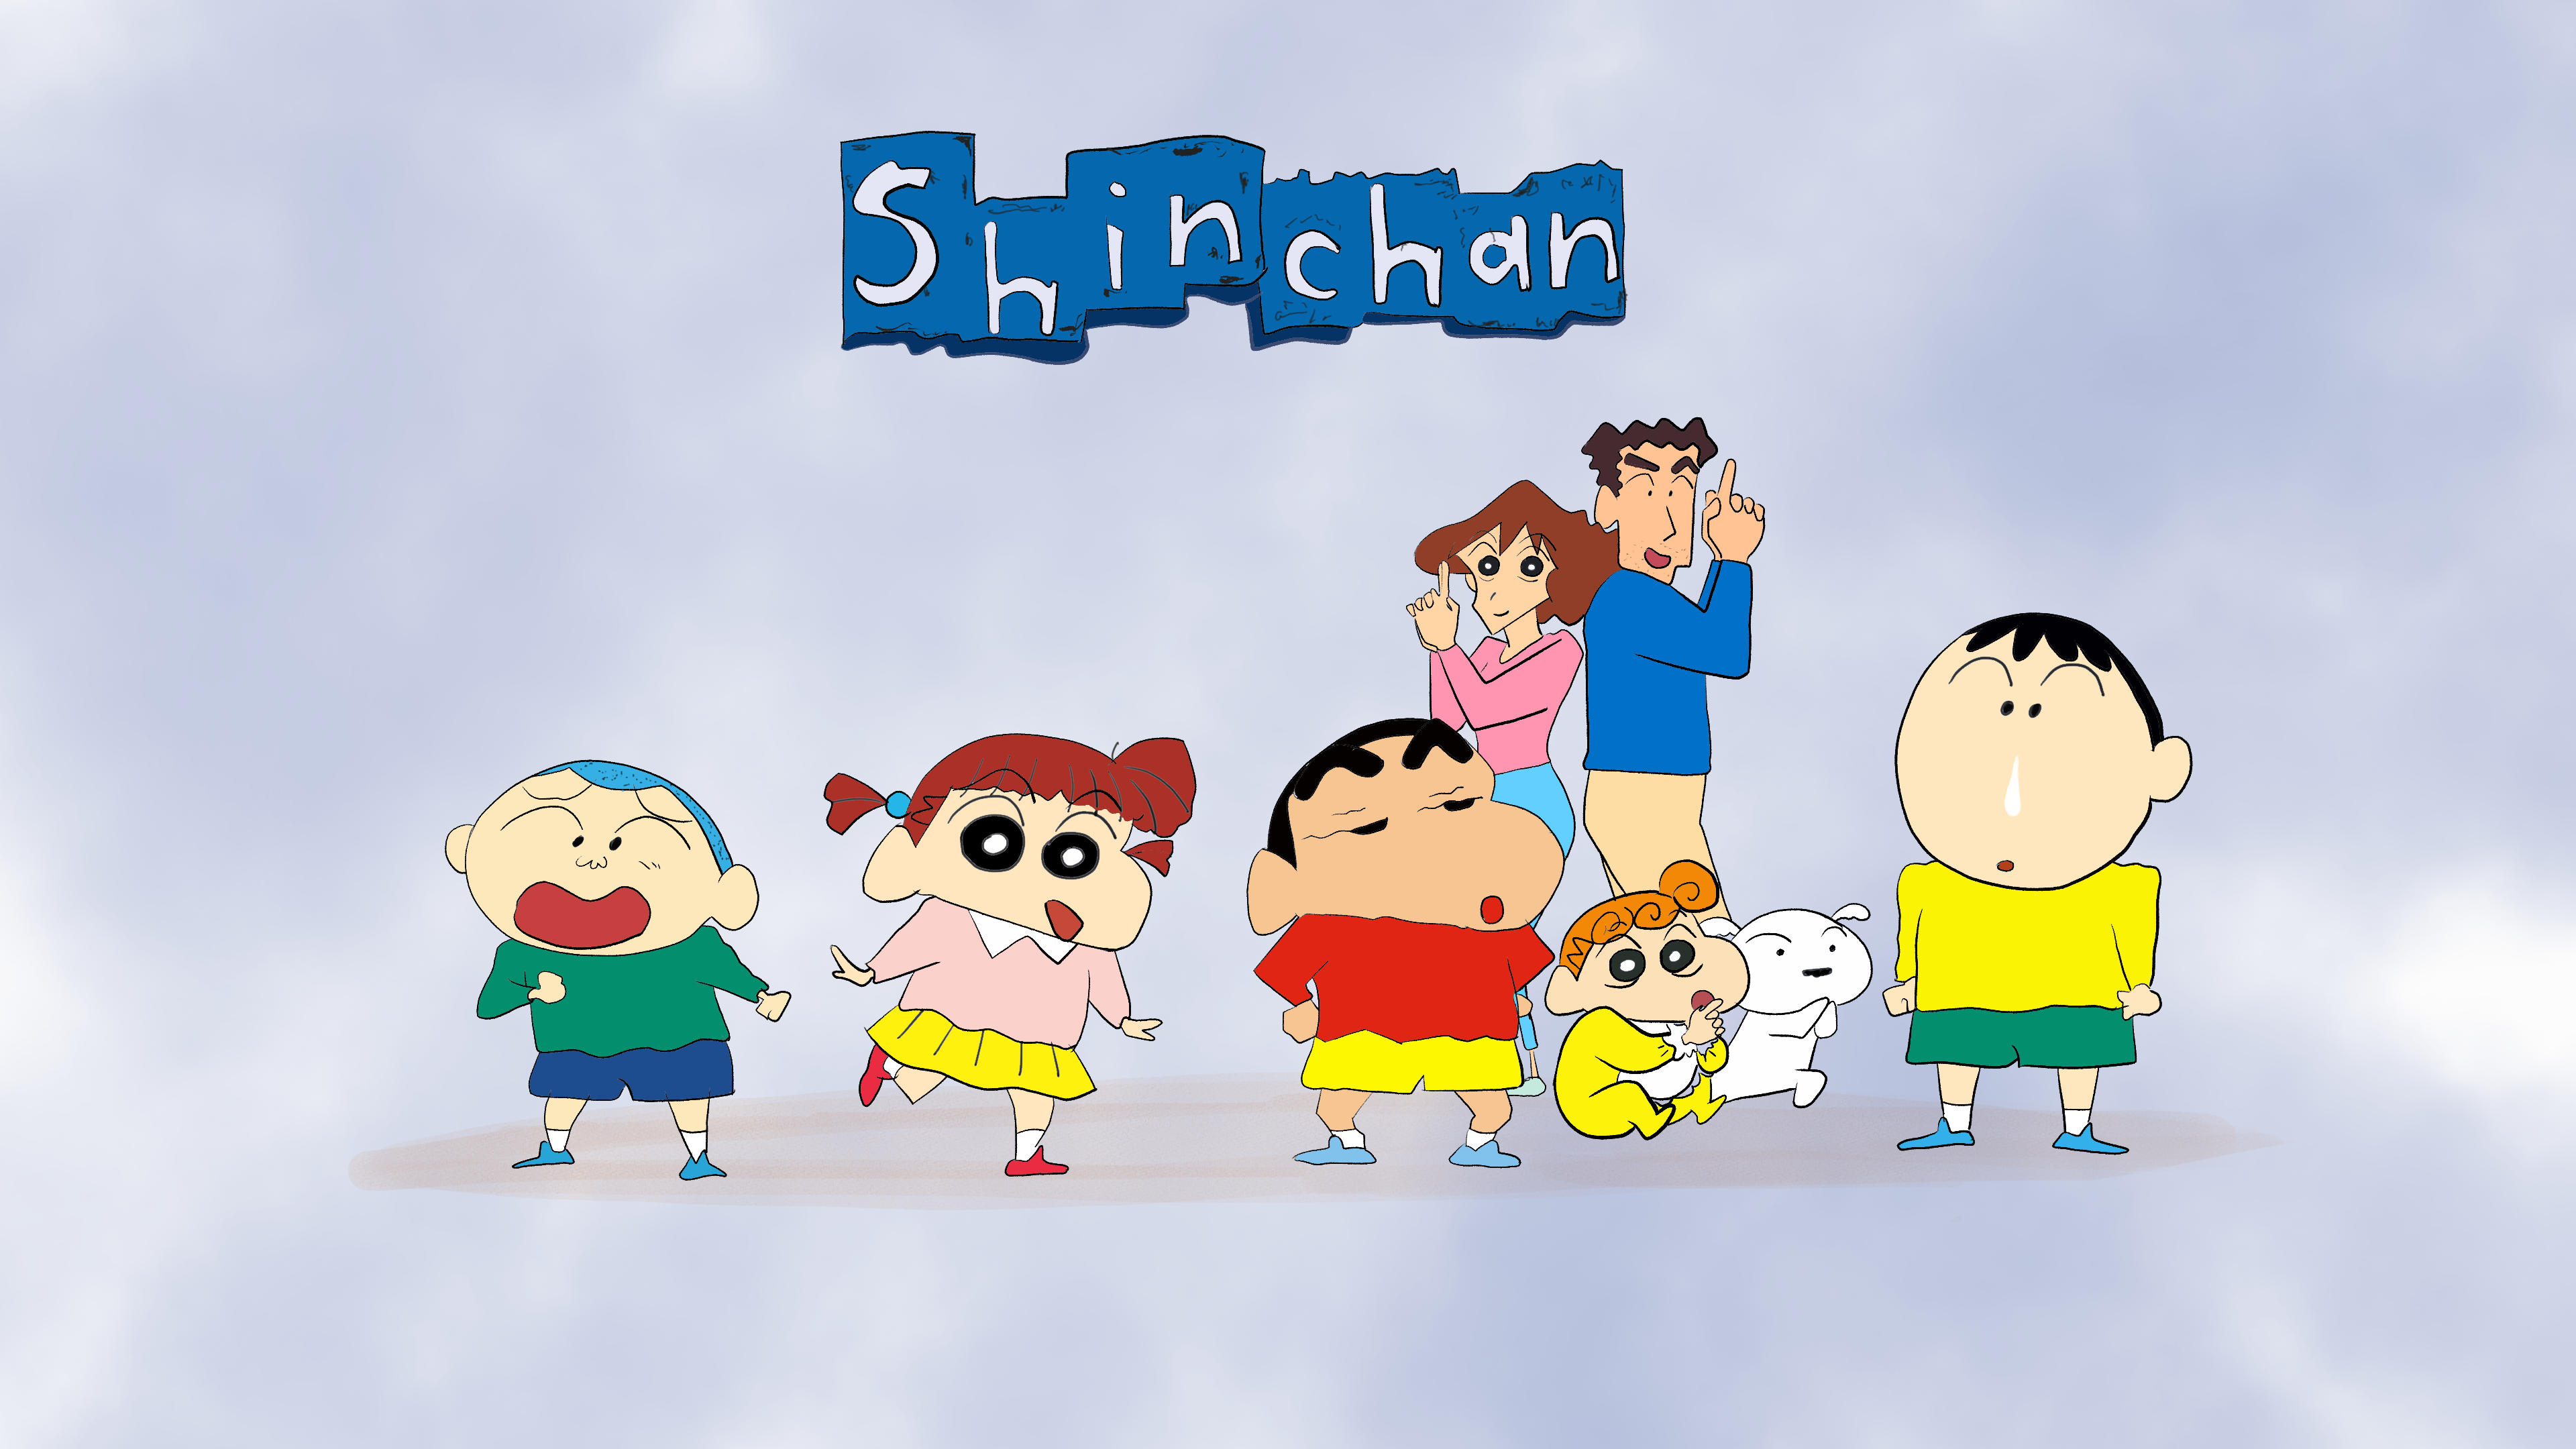 Anime Crayon Shin-chan HD Wallpaper | Background Image